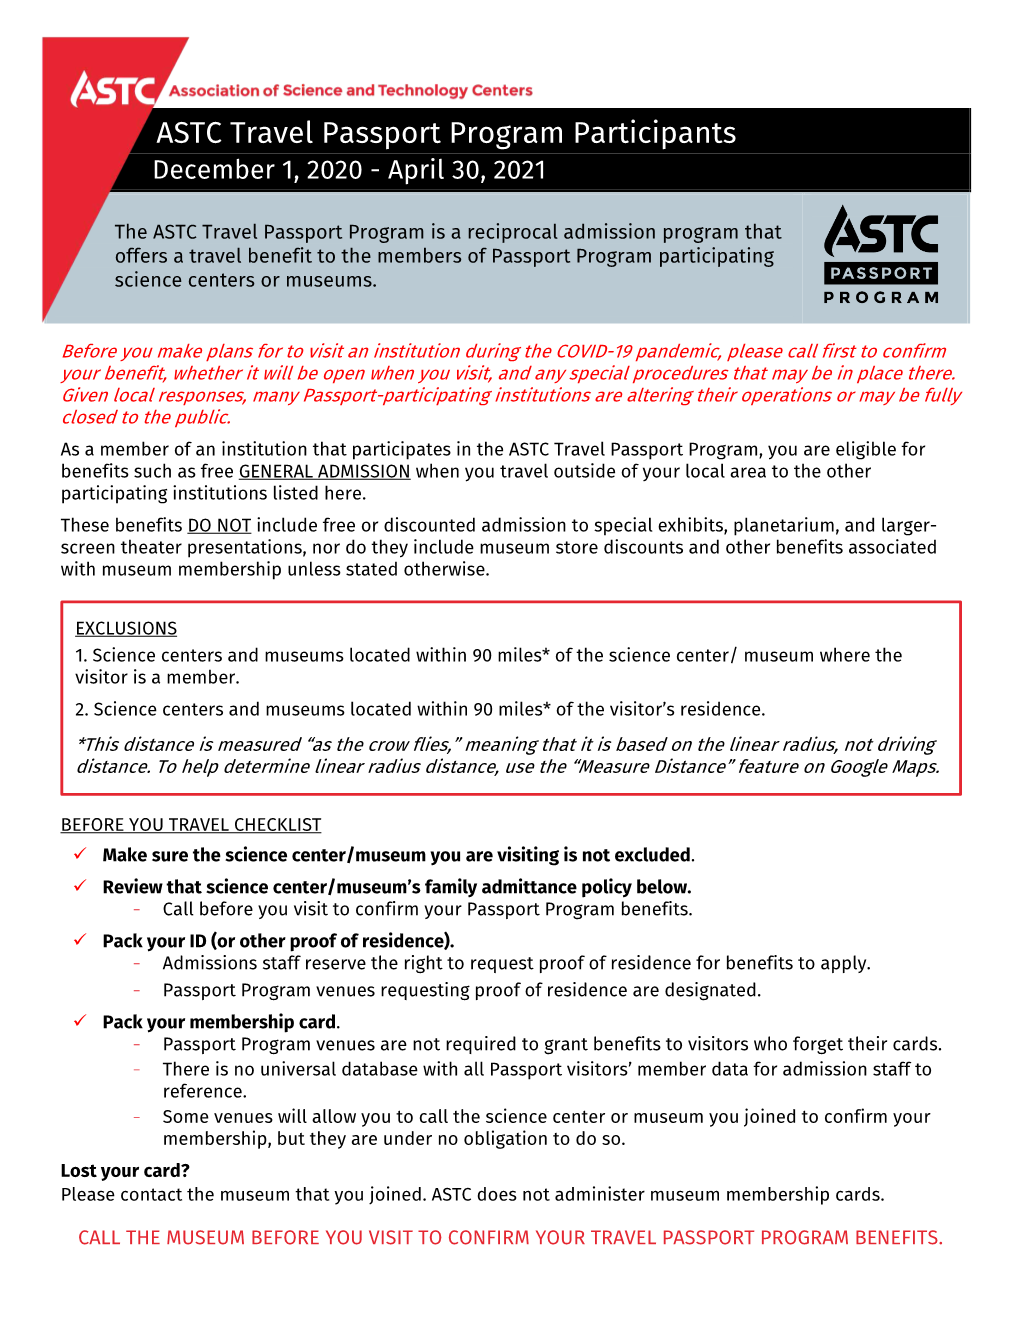 ASTC Travel Passport Program Participants December 1, 2020 - April 30, 2021